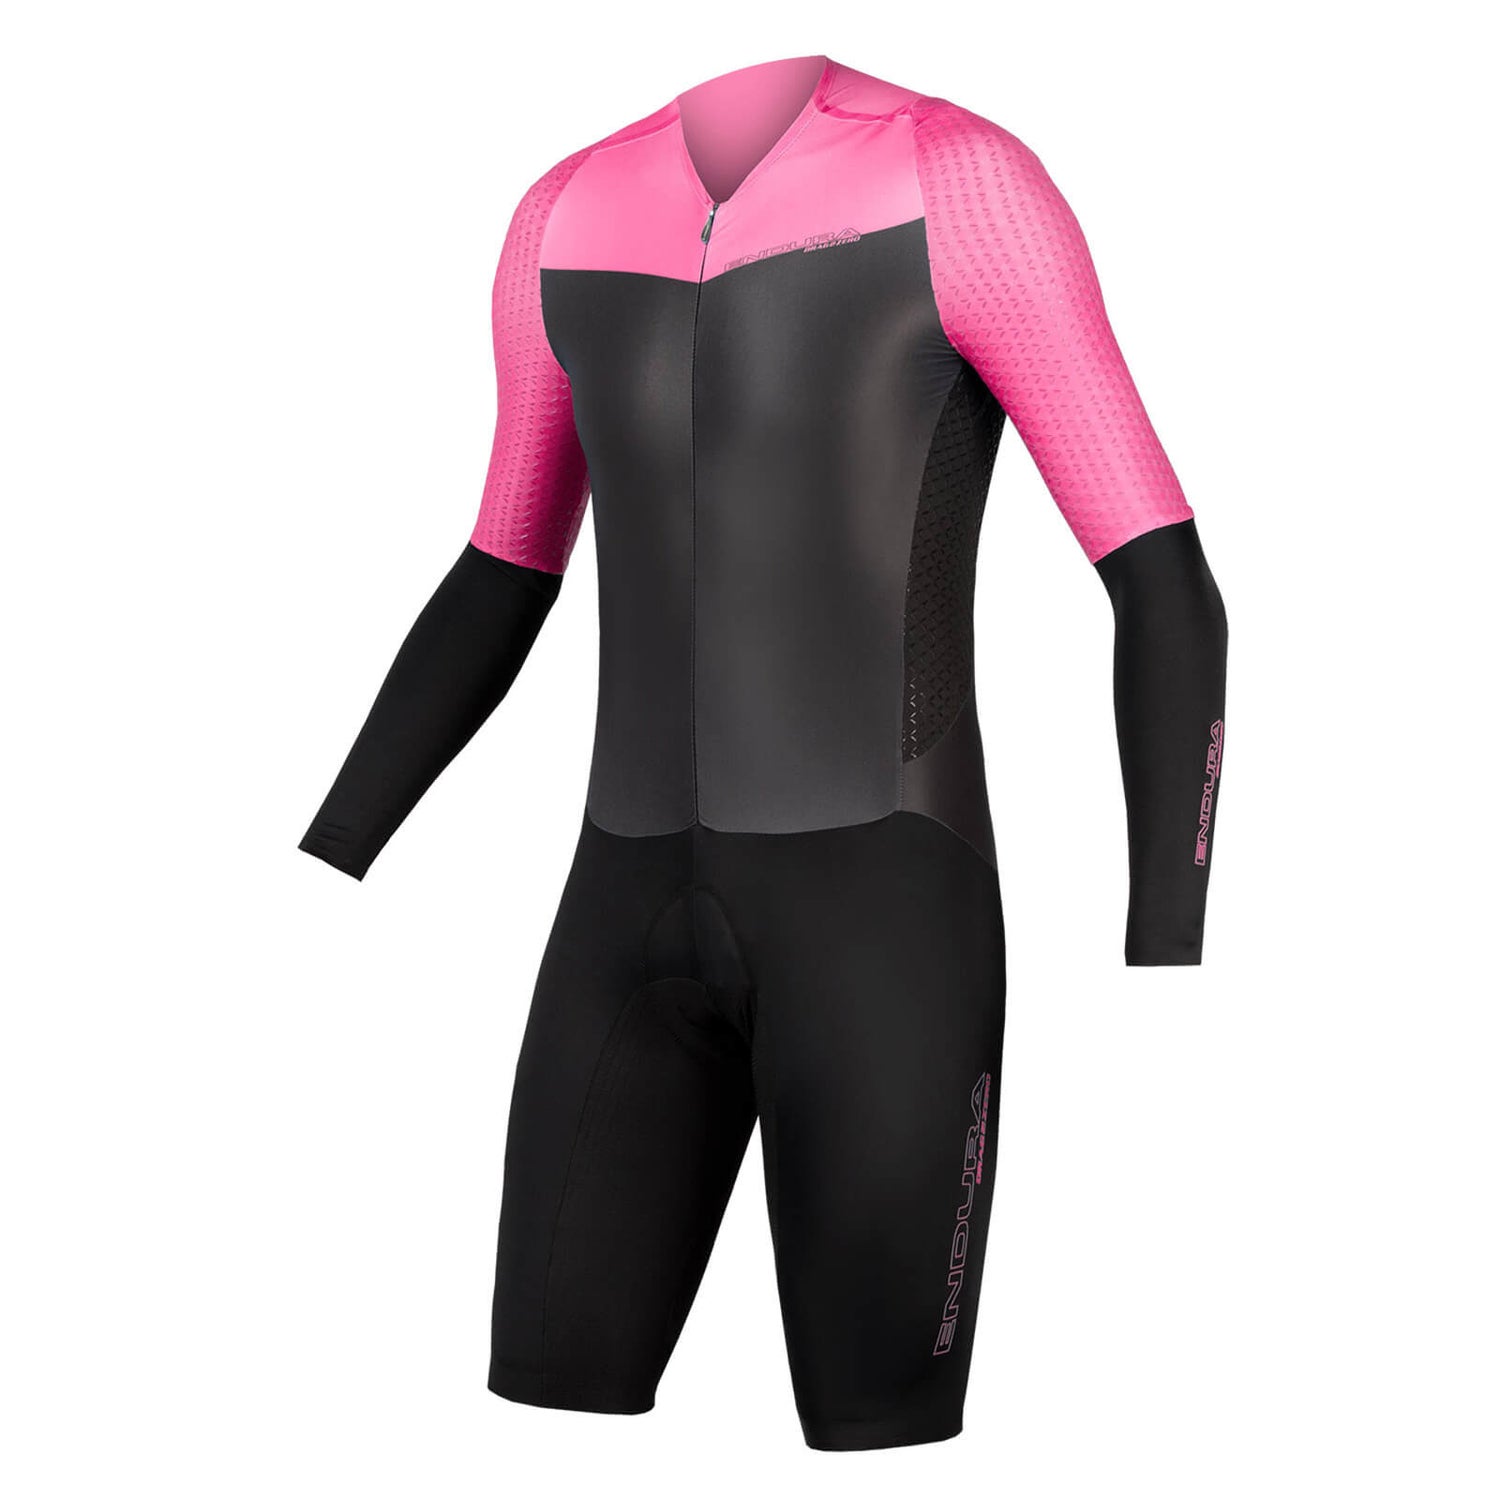 Men's D2Z Encapsulator Suit SST - Hi-Viz Pink - XXL